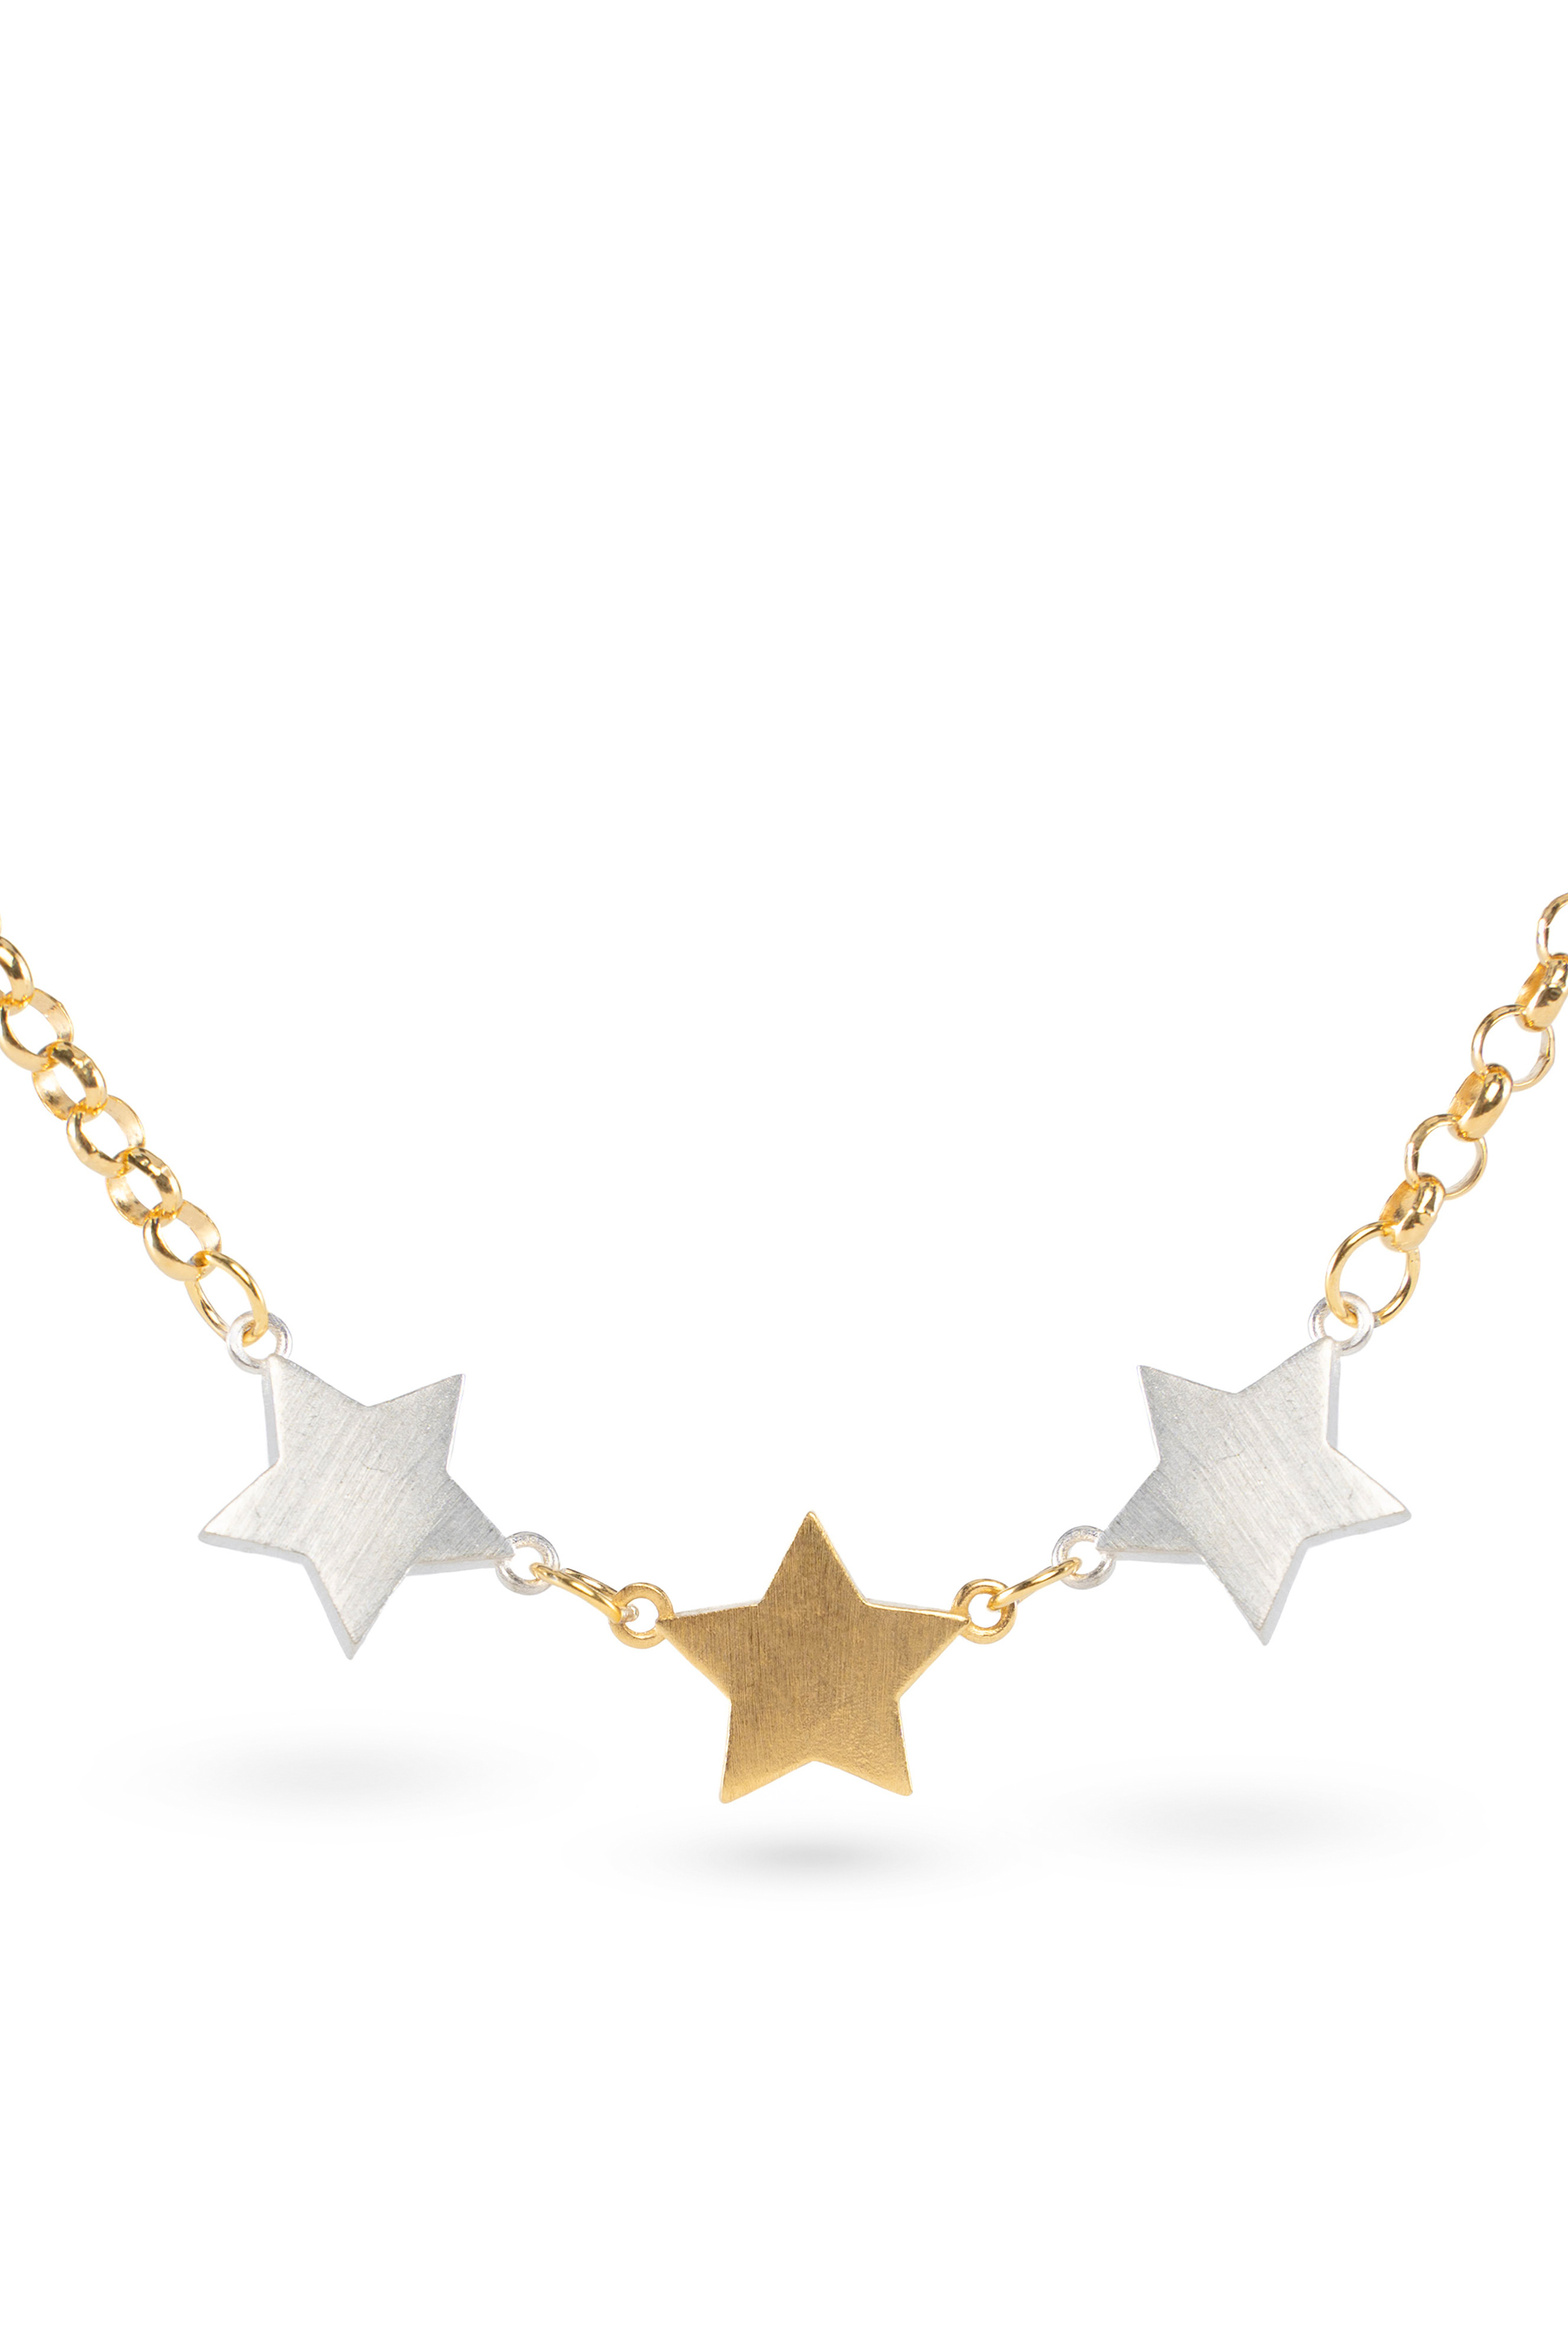 cb366_trio_star_necklace_gold_mix_close.jpg